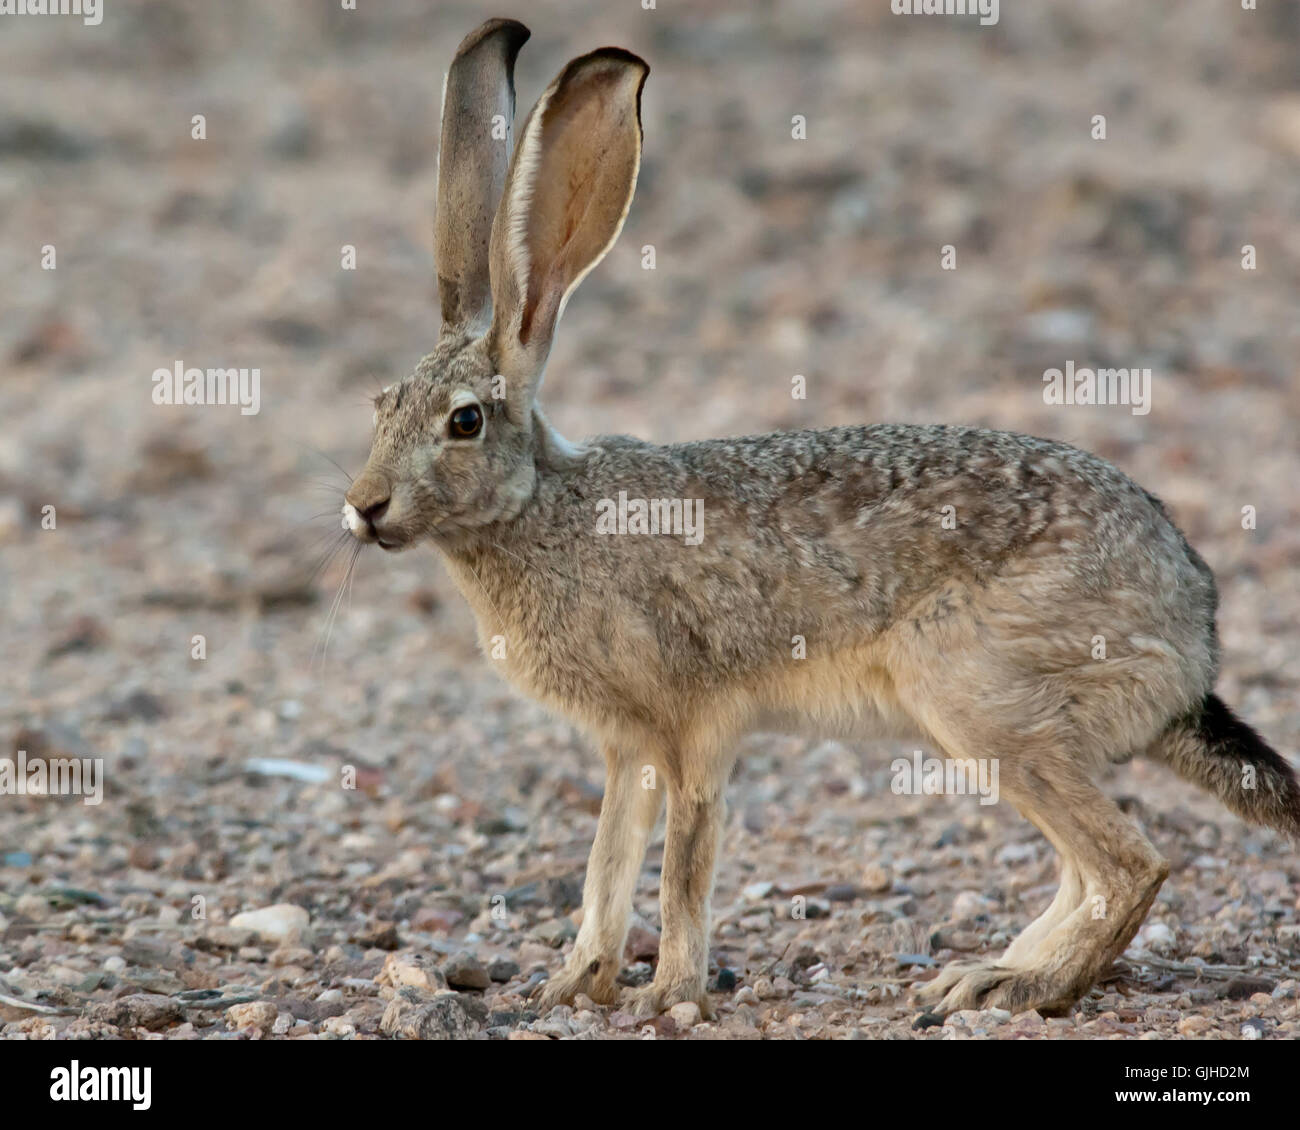 Portrait of a Jackrabbit, Arizona, United States Stock Photo